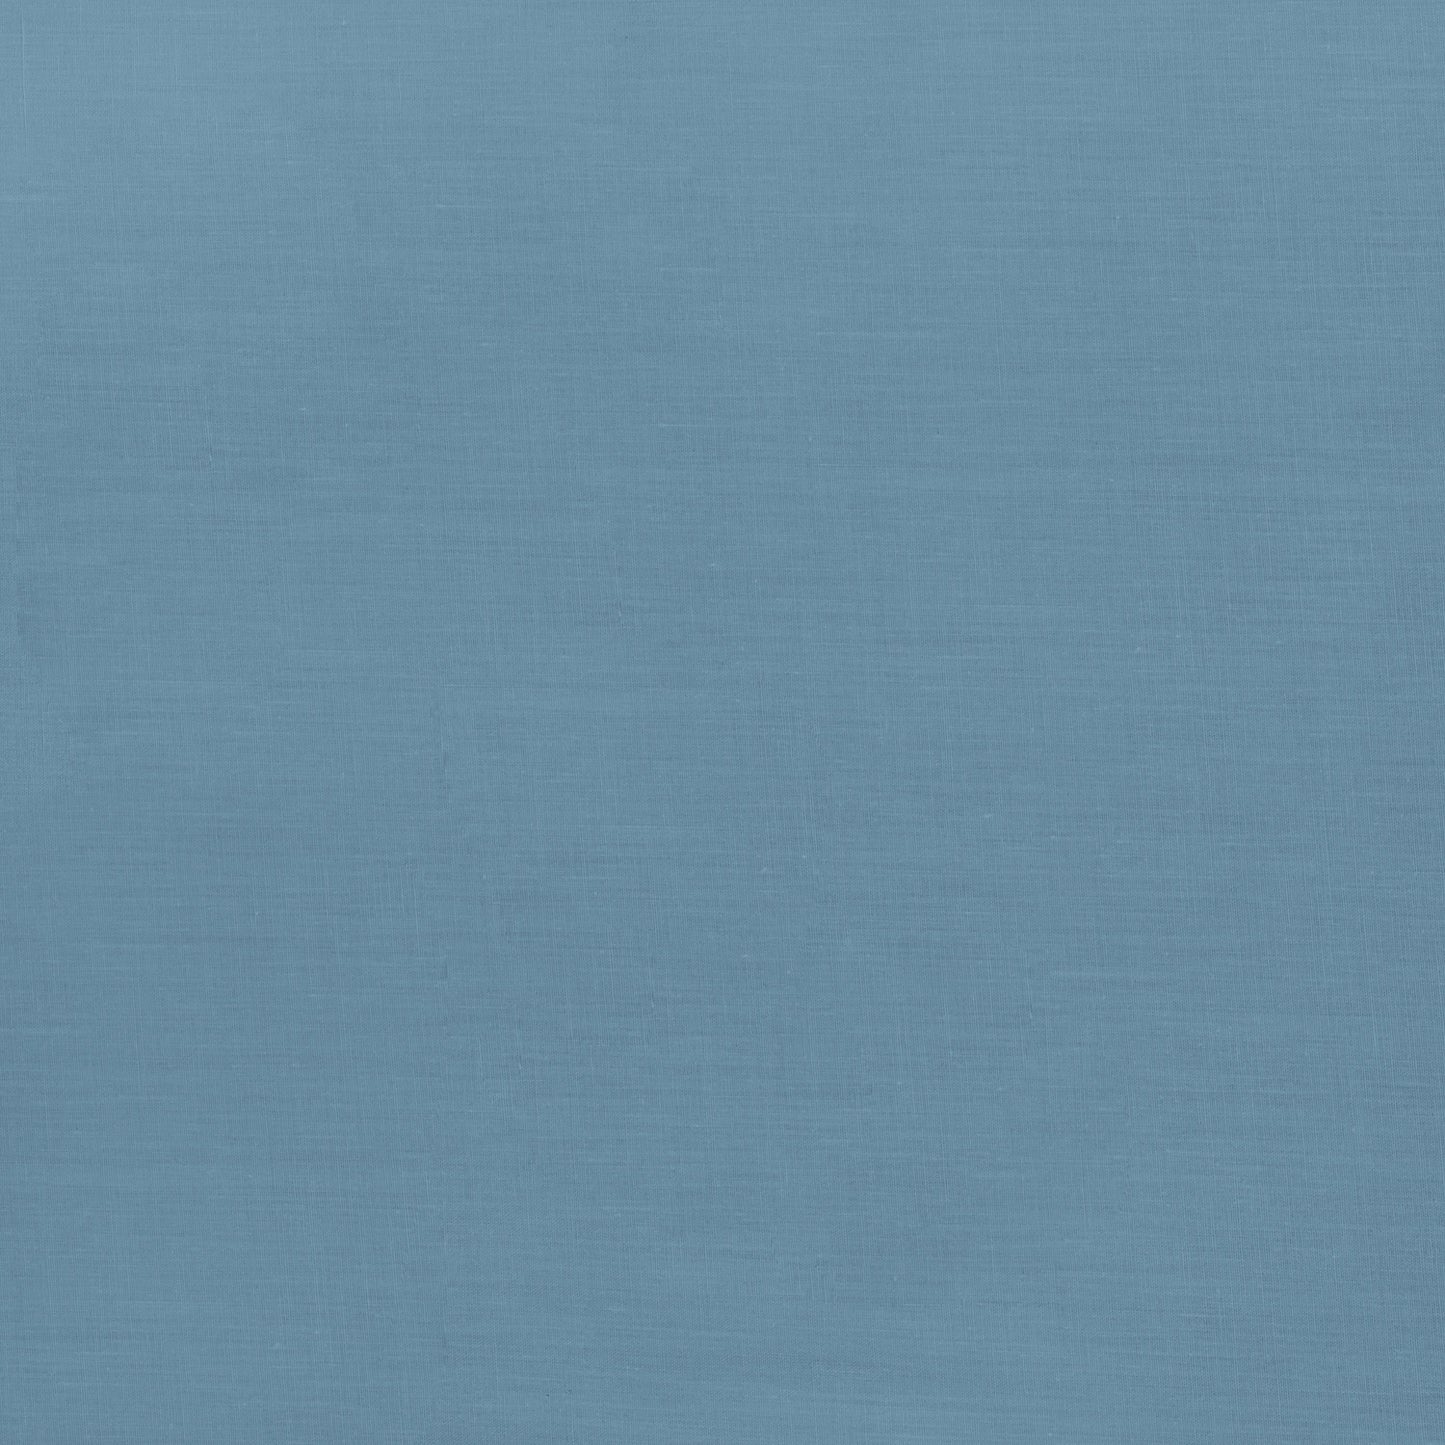 Sheeting Poly Cotton Denim Blue #24 240cm